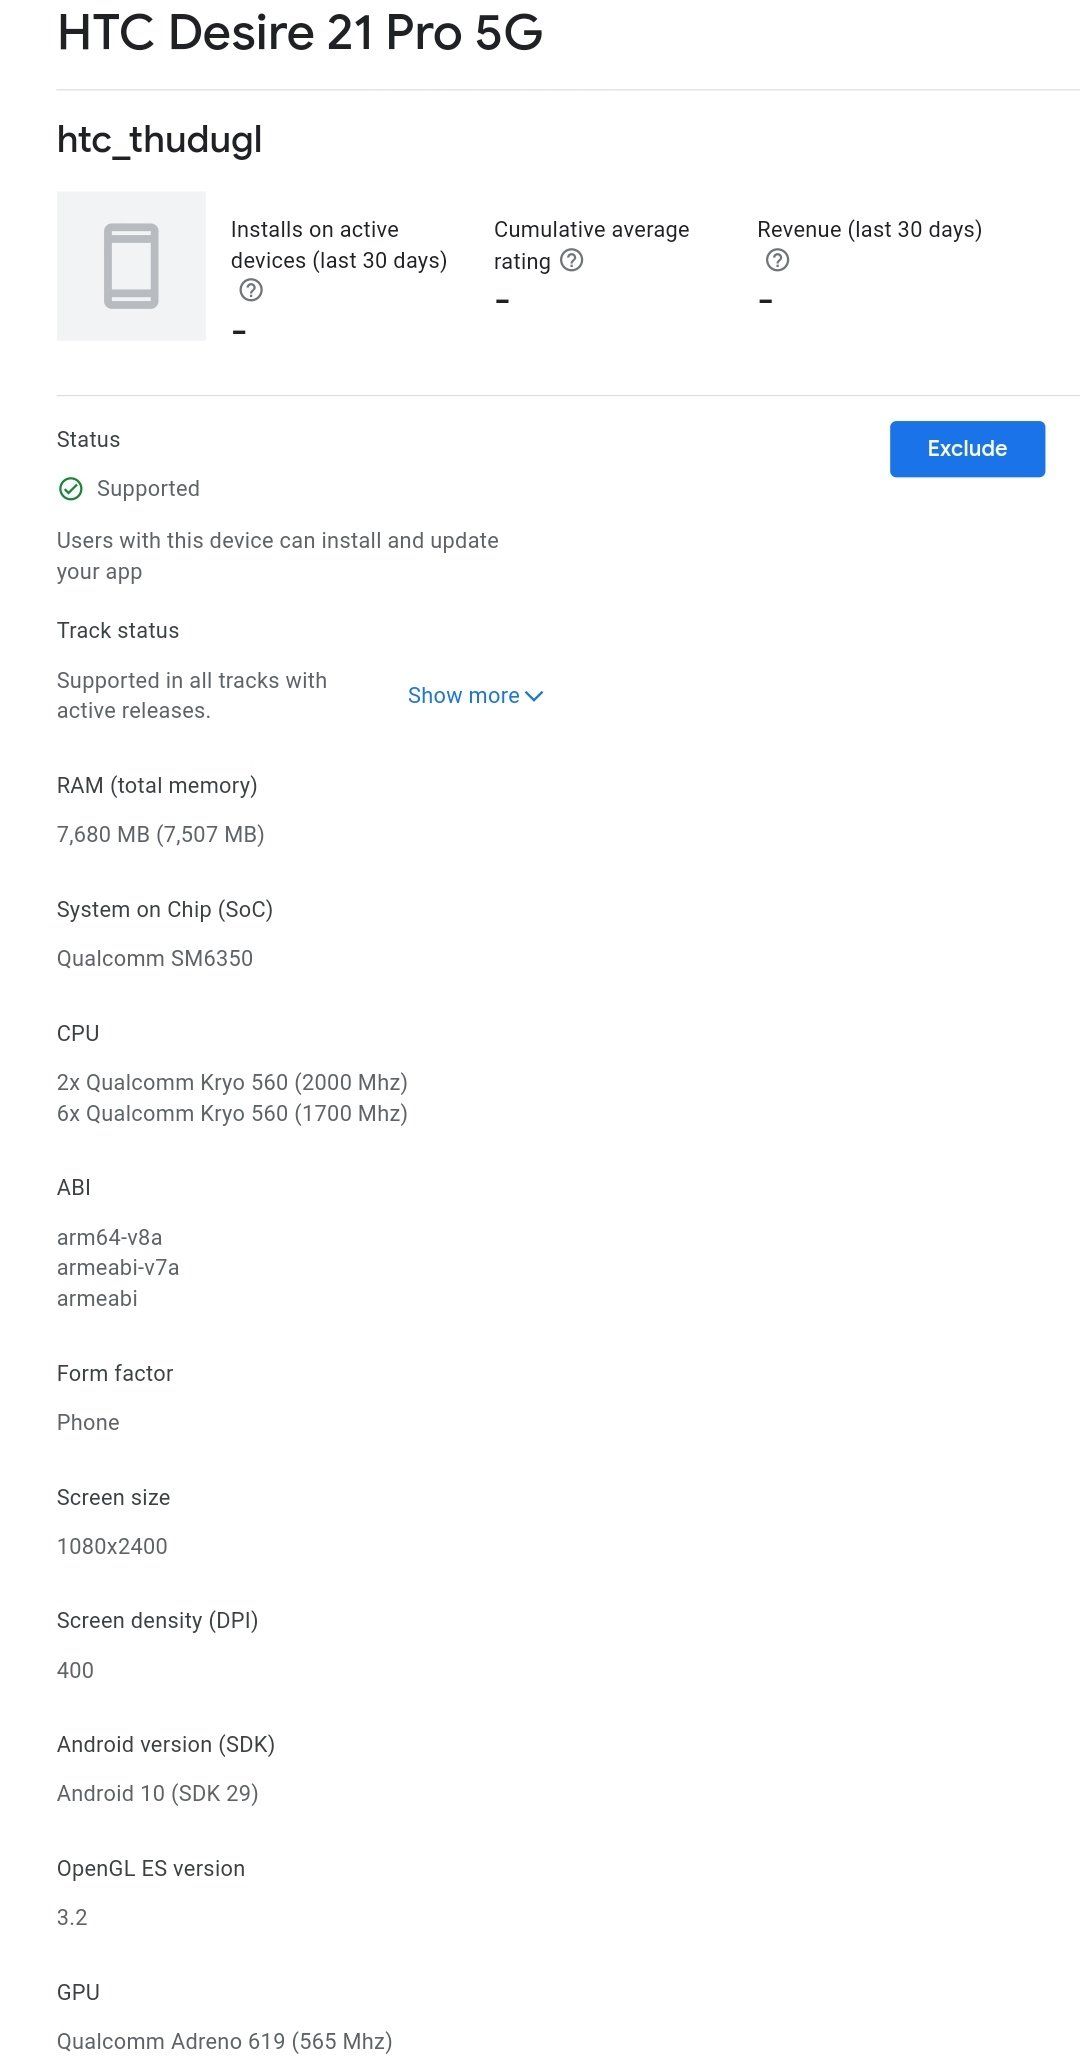 HTC Desire 21 Pro 5G Google Play Console listing